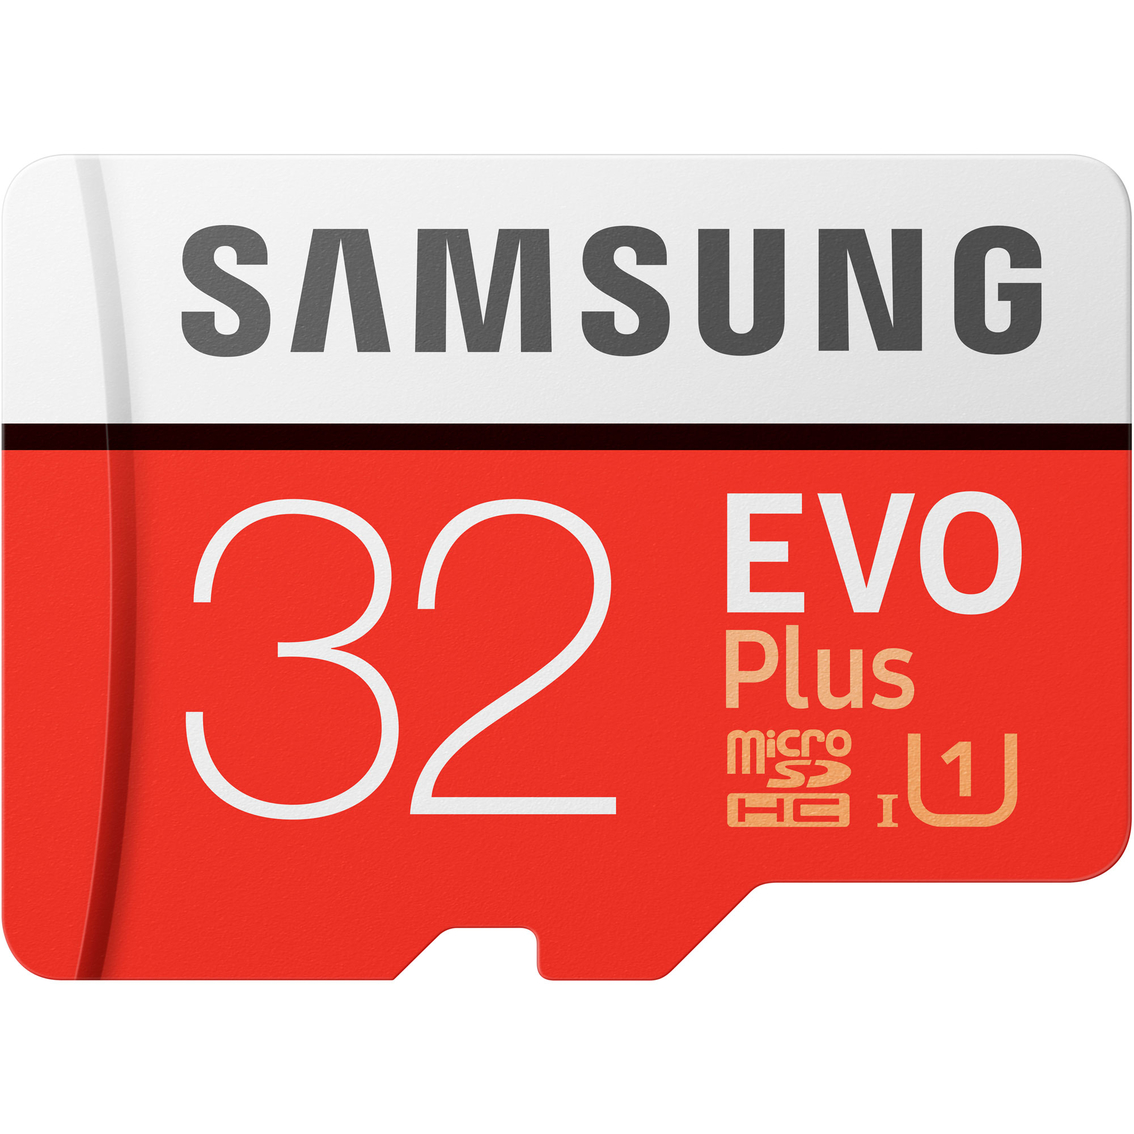 Samsung 32GB microSDHC EVO Plus - Image 3 of 3